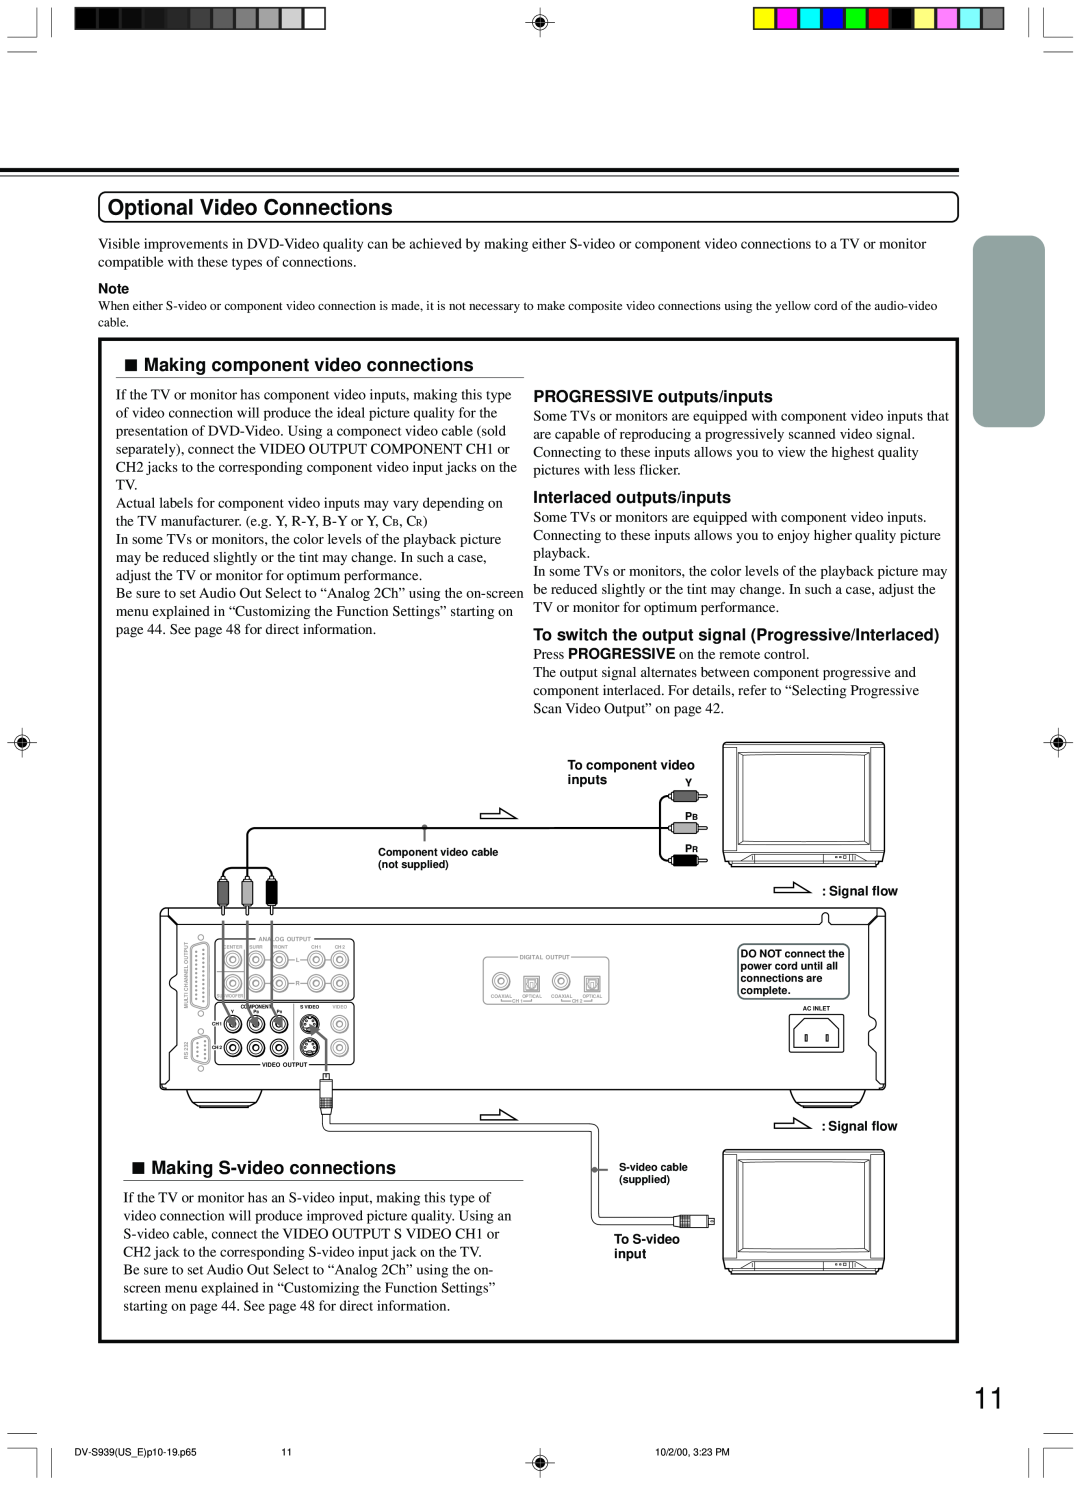 Onkyo DV-S939 instruction manual Optional Video Connections, Making component video connections, Making S-video connections 